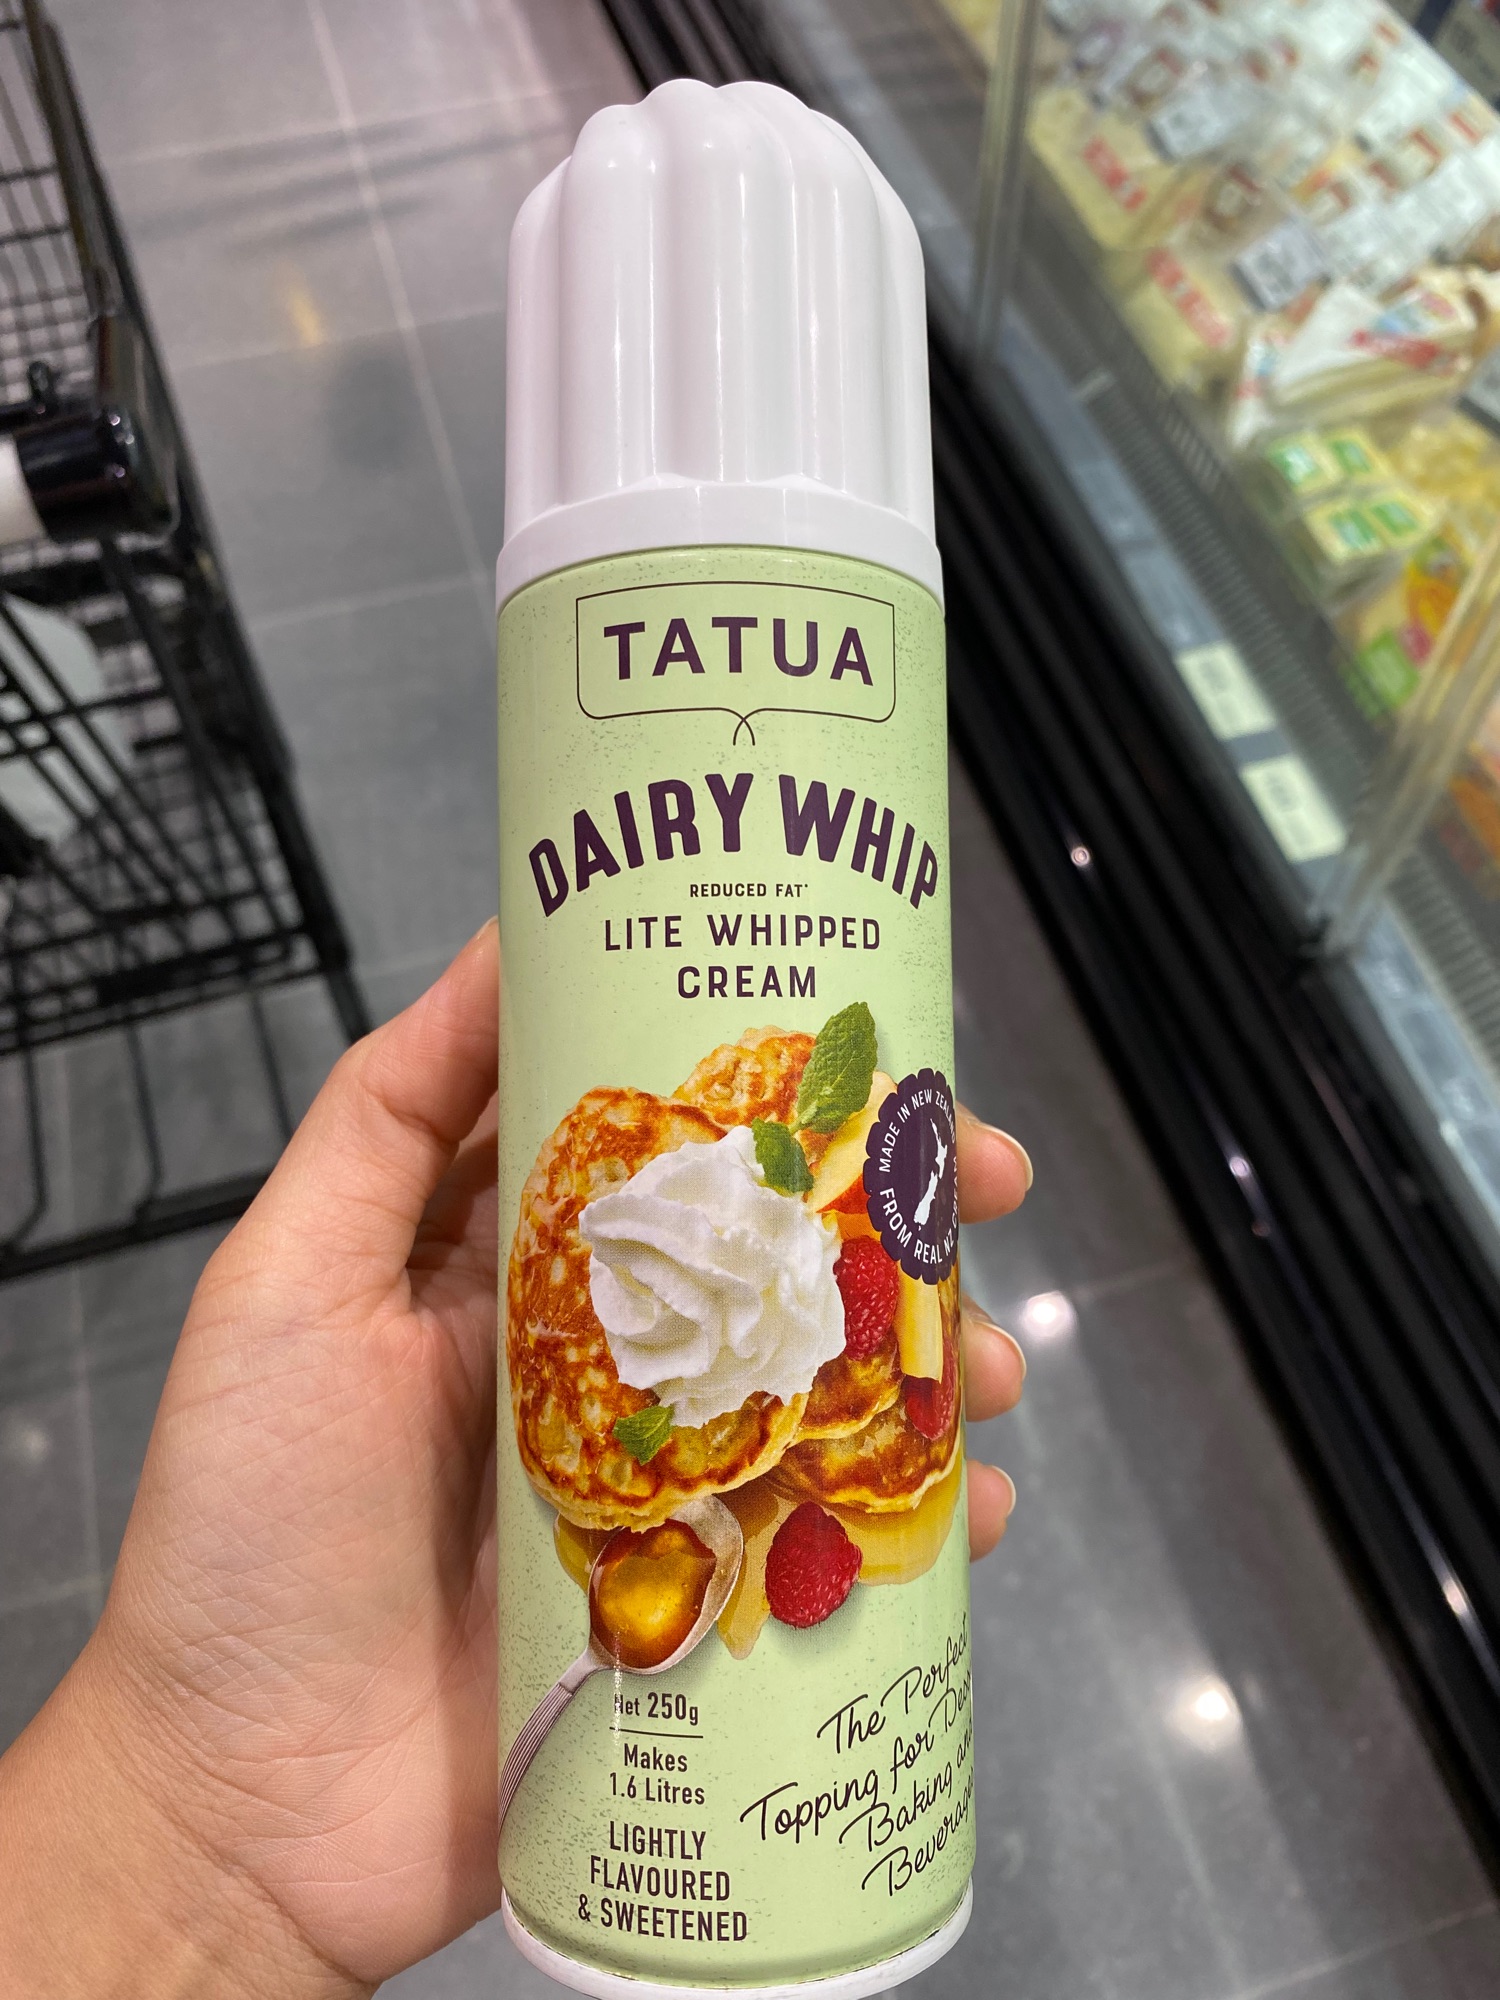 Tatua Dairy Whip Lite Whipped Cream 250g (reduce fat) ตาตัวแดรี่วิป ไลท์ วิปครีม จากนิวซีแลนด์250 กรัม